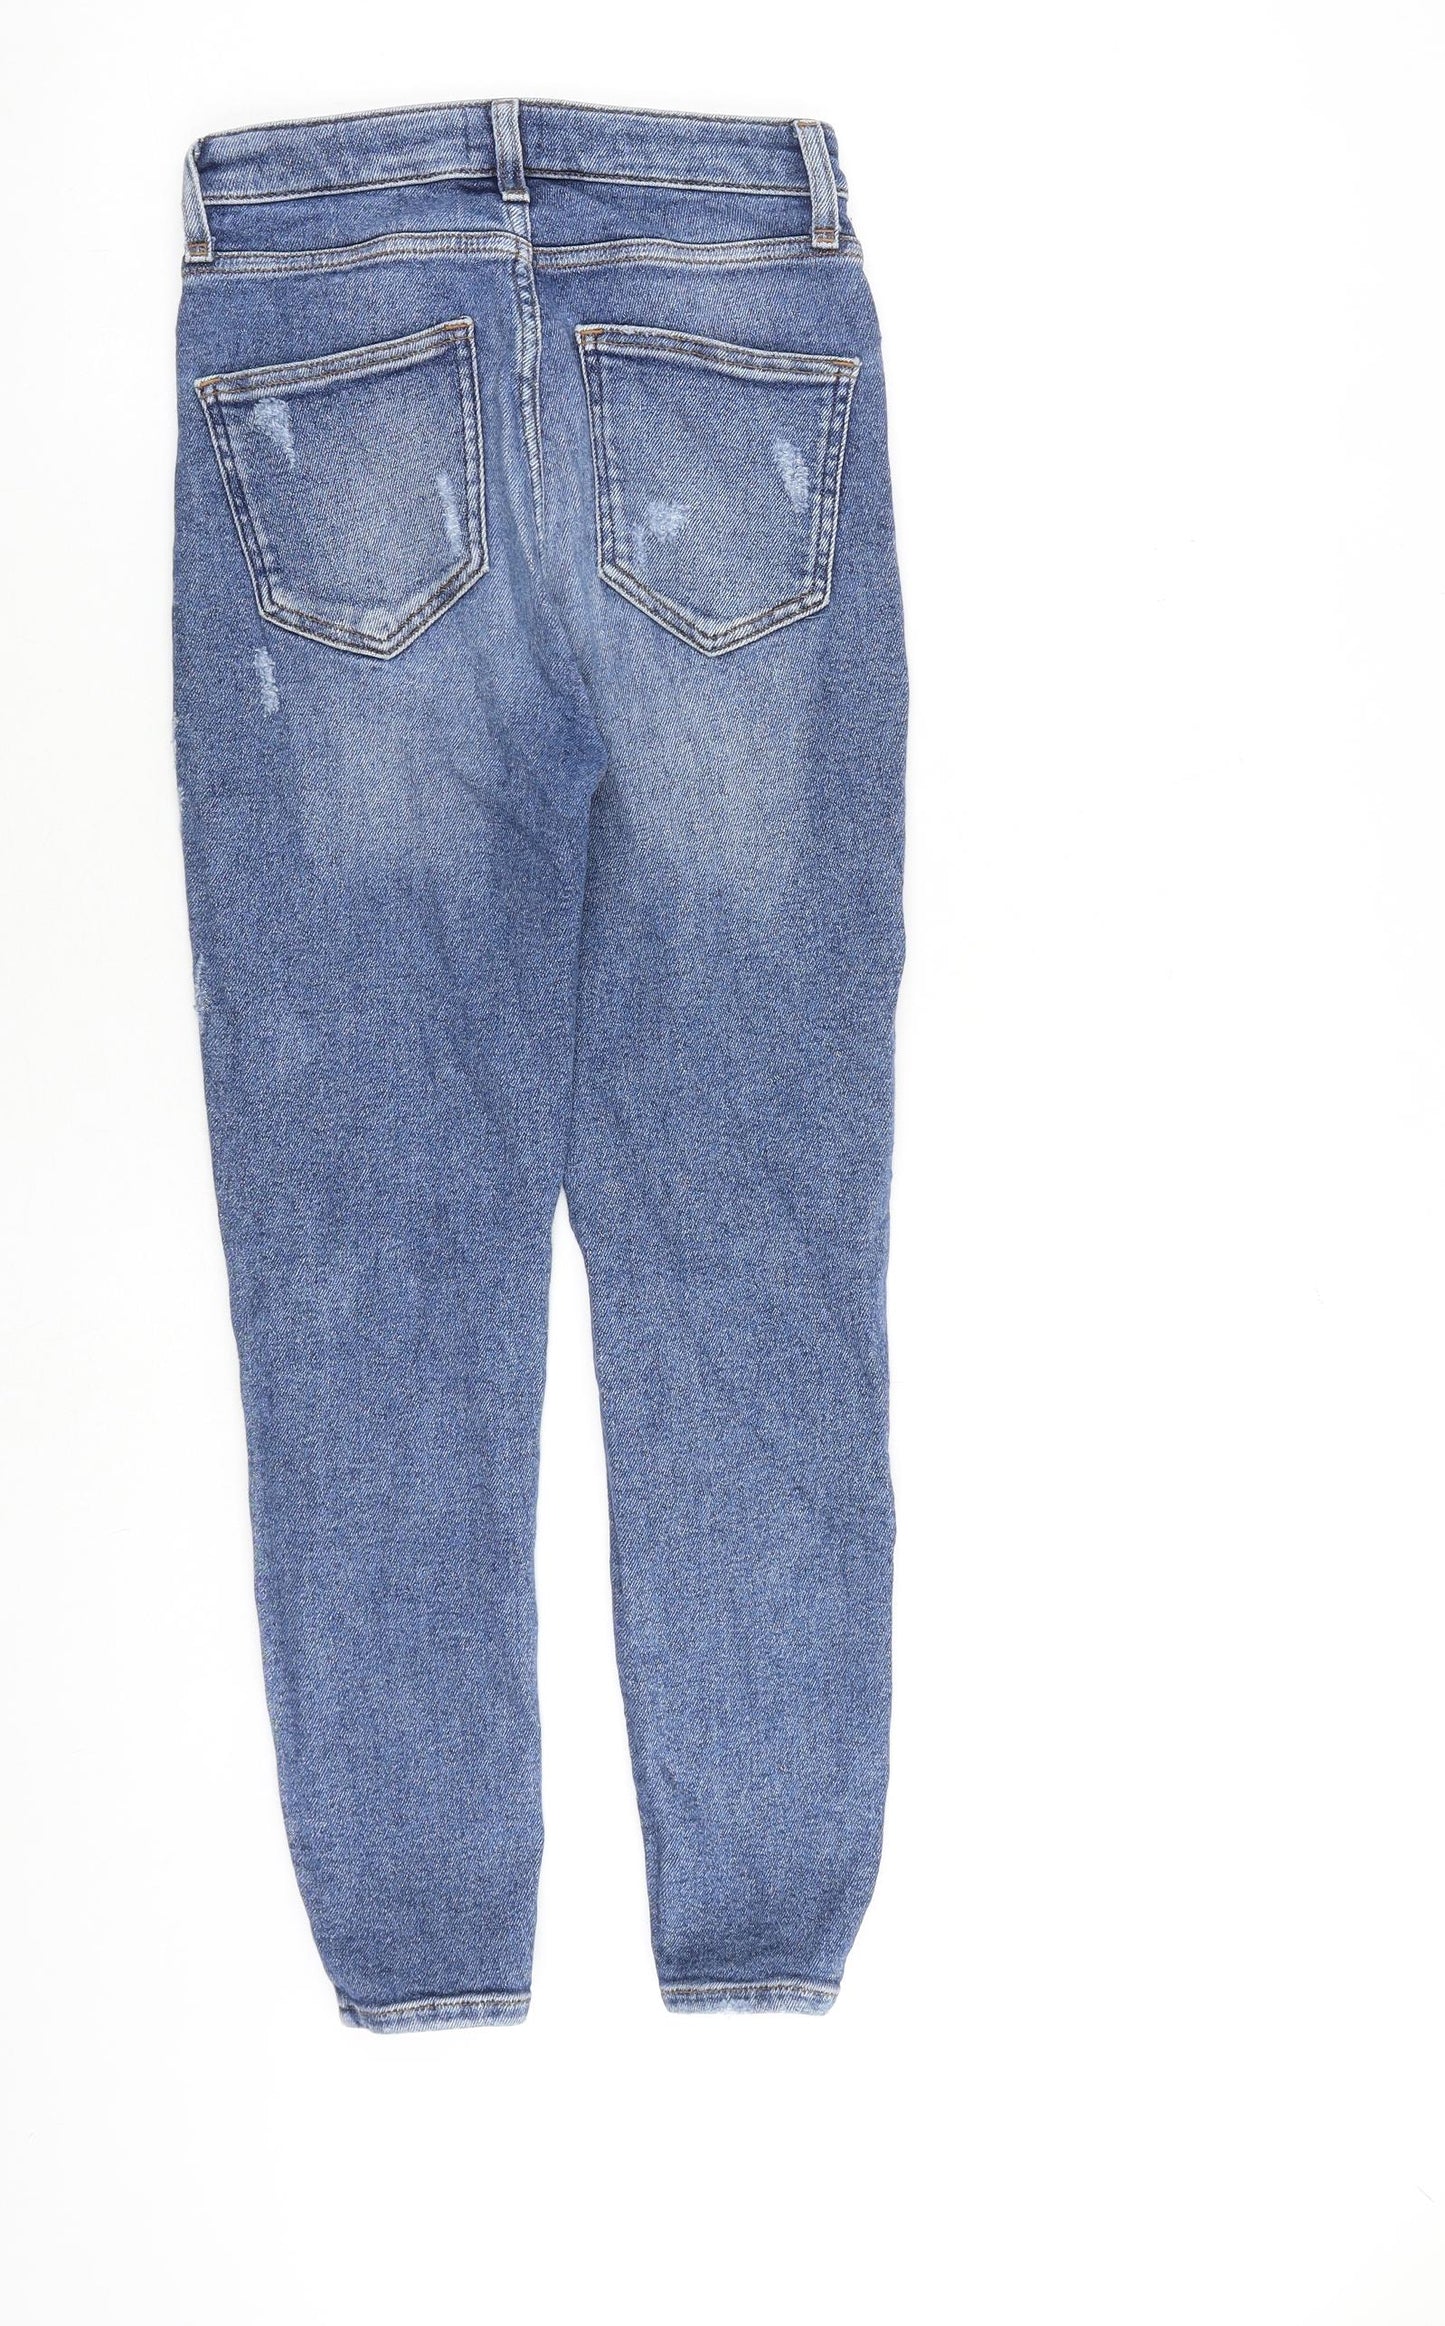 River Island Womens Blue Cotton Skinny Jeans Size 10 L26 in Regular Zip